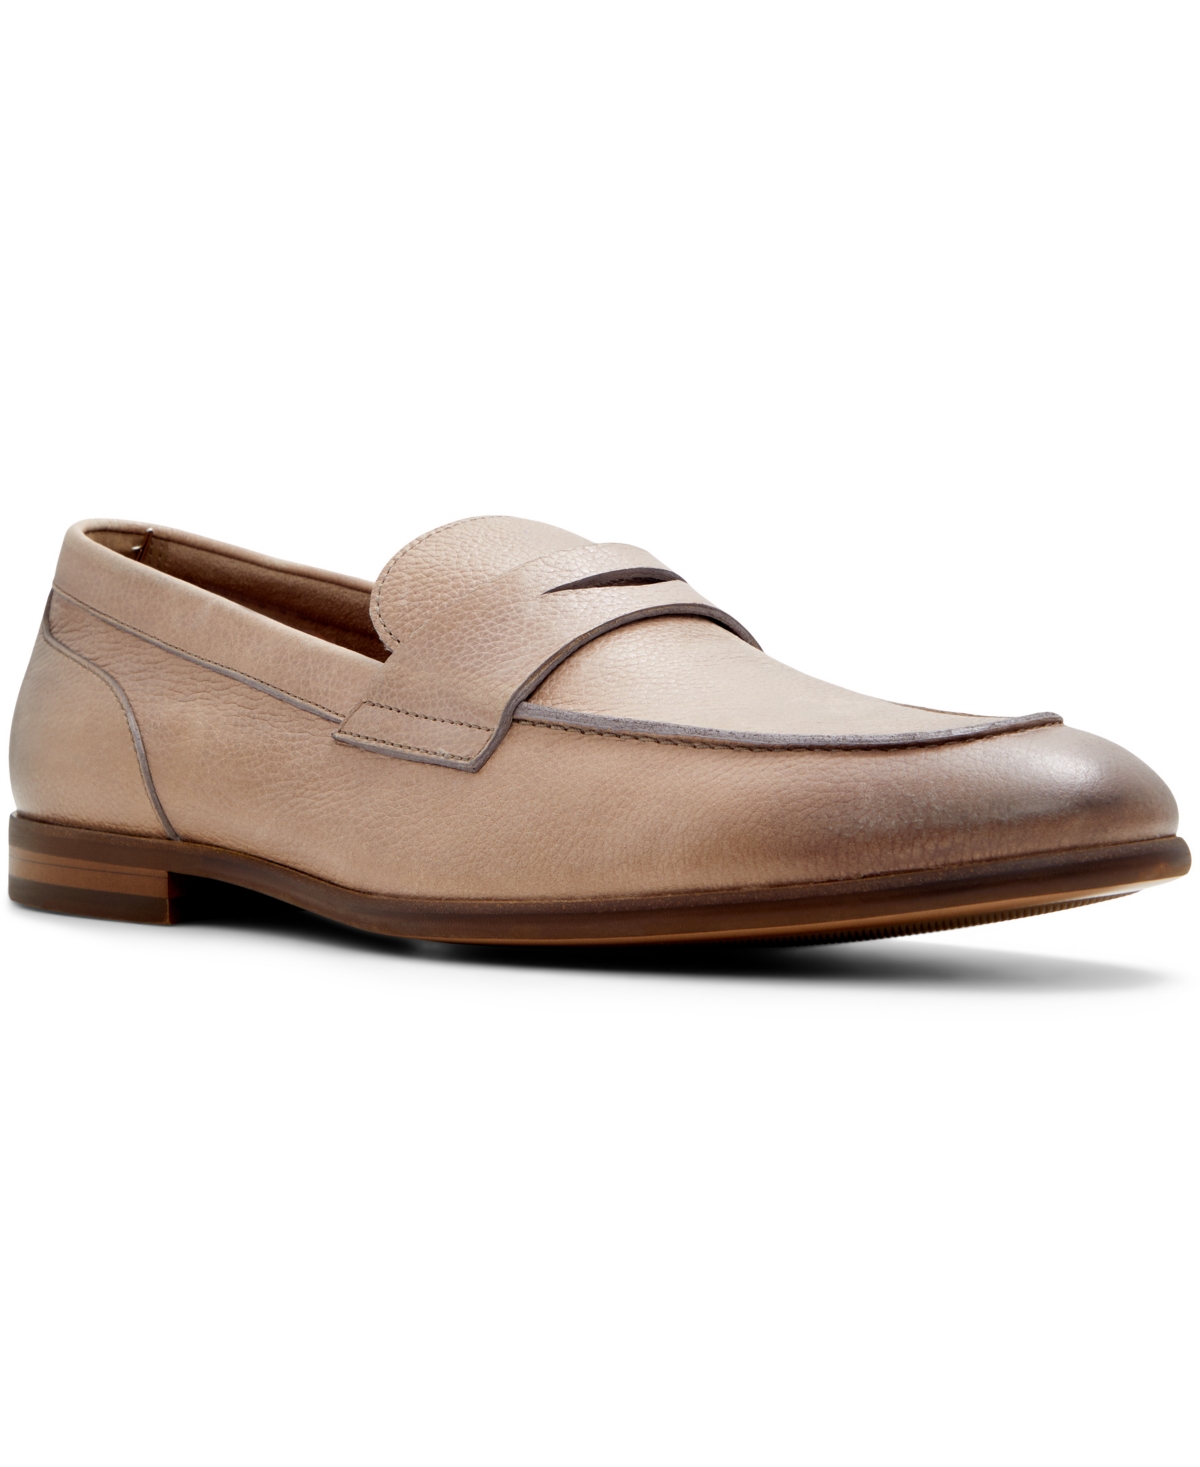 Aldo Men's Bainville Loafers Men's Shoes In Light Brown